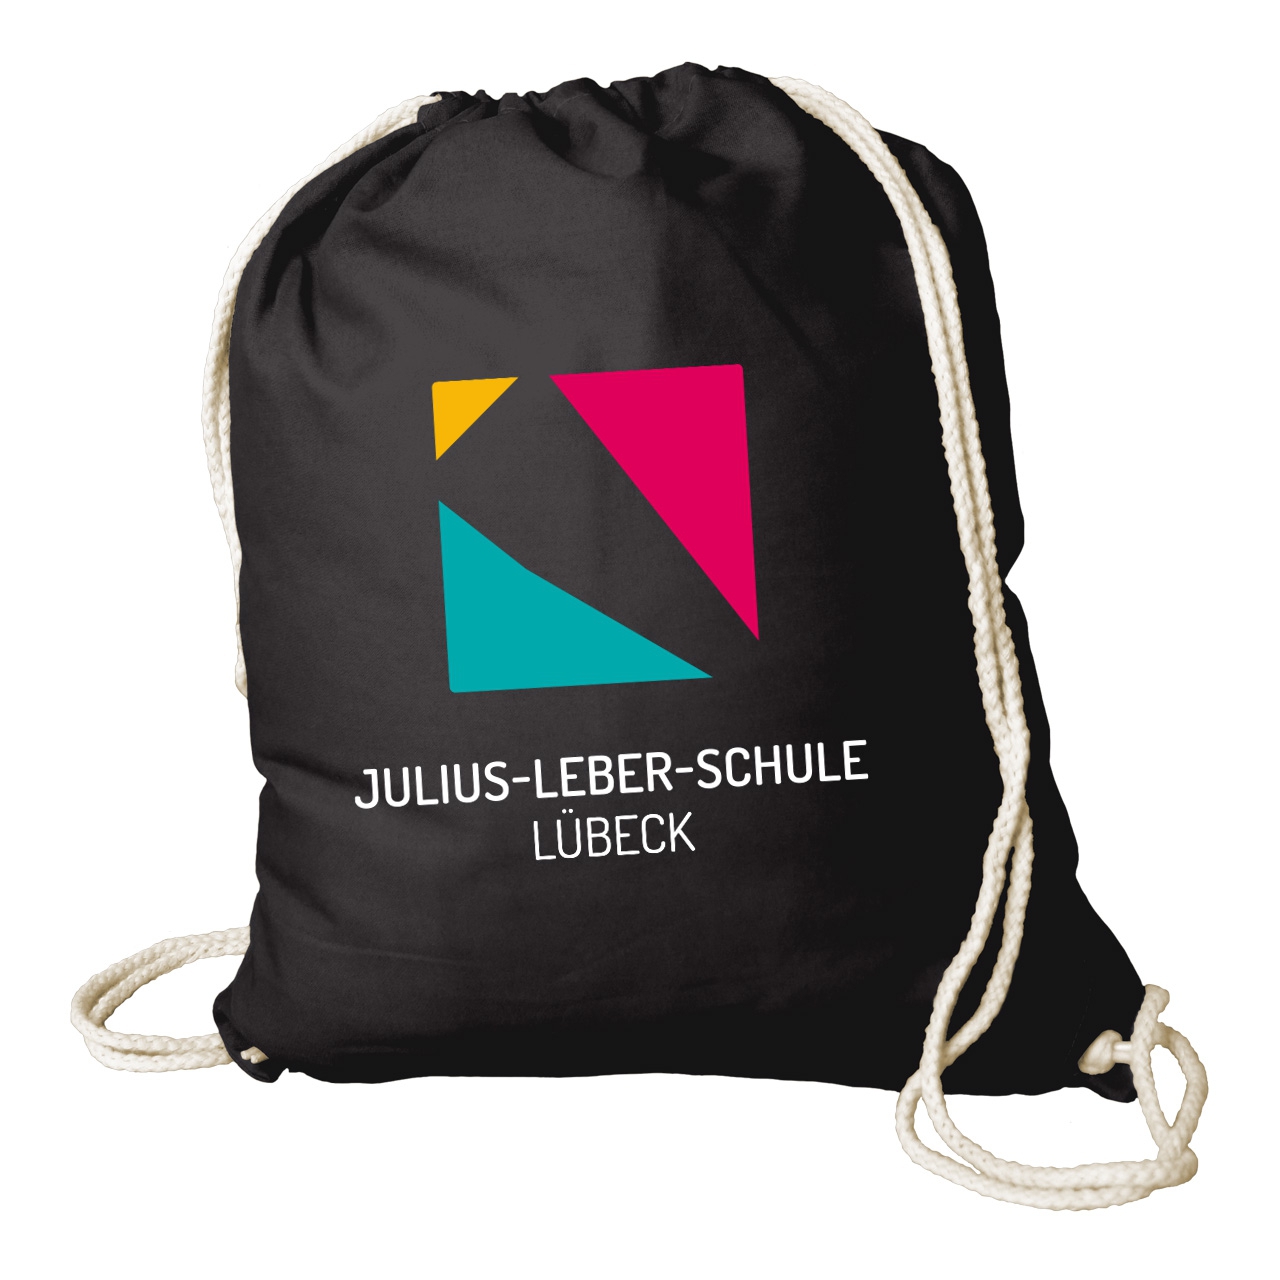 Julius-Leber-Schule Rucksack Beutel schwarz